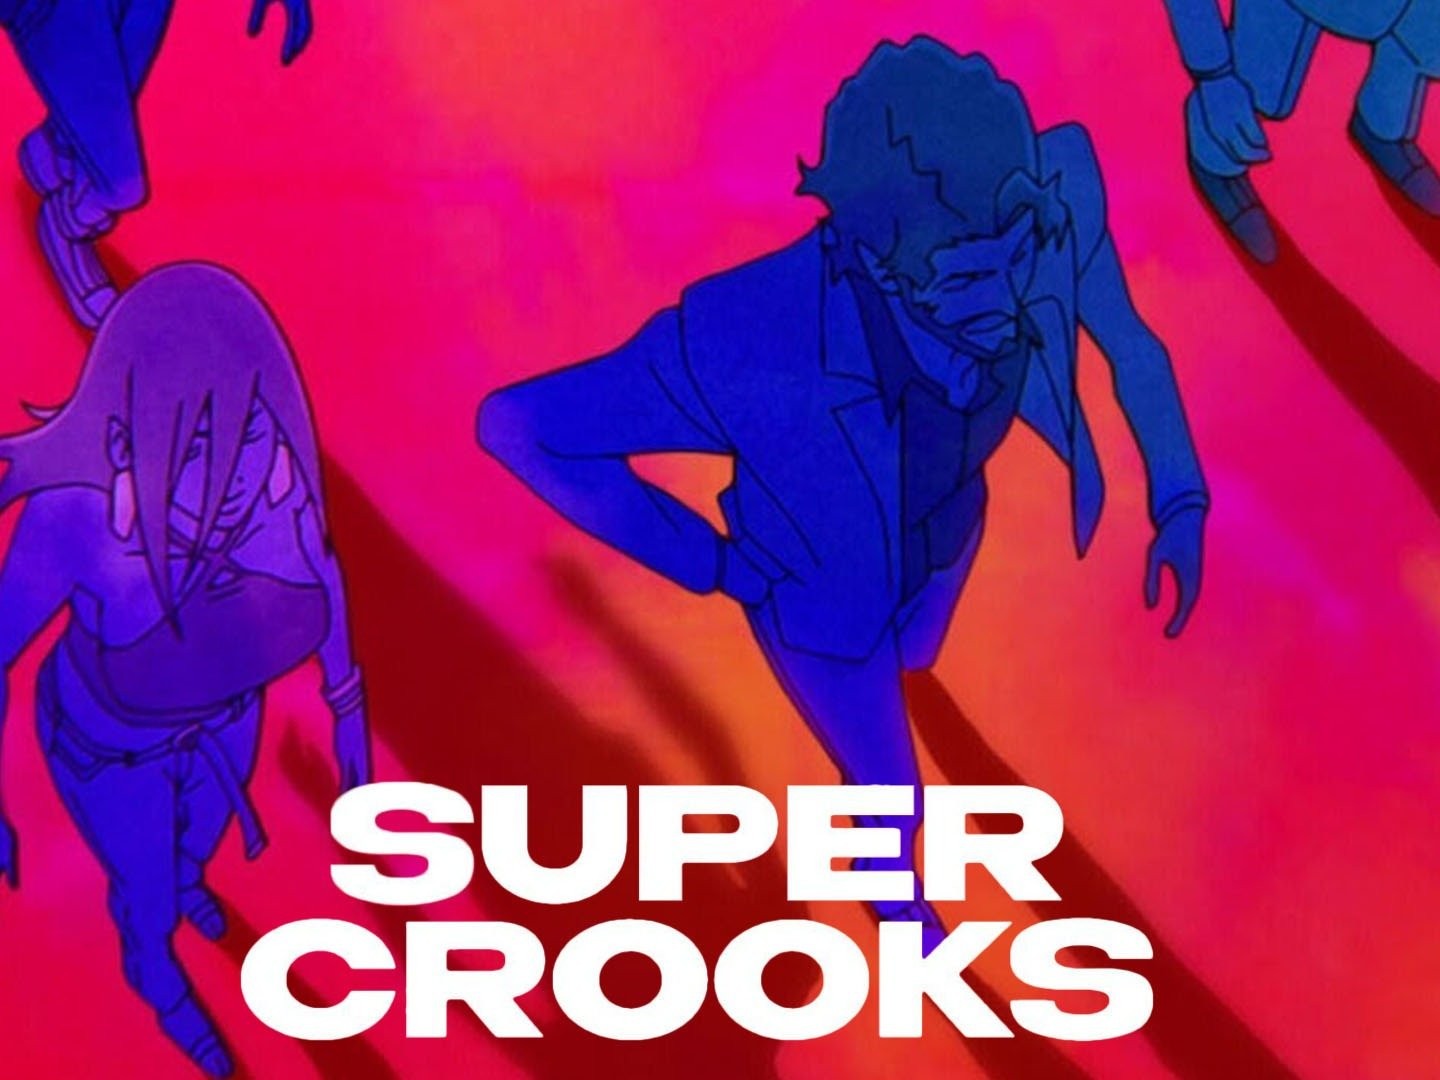 Anime Like Super Crooks